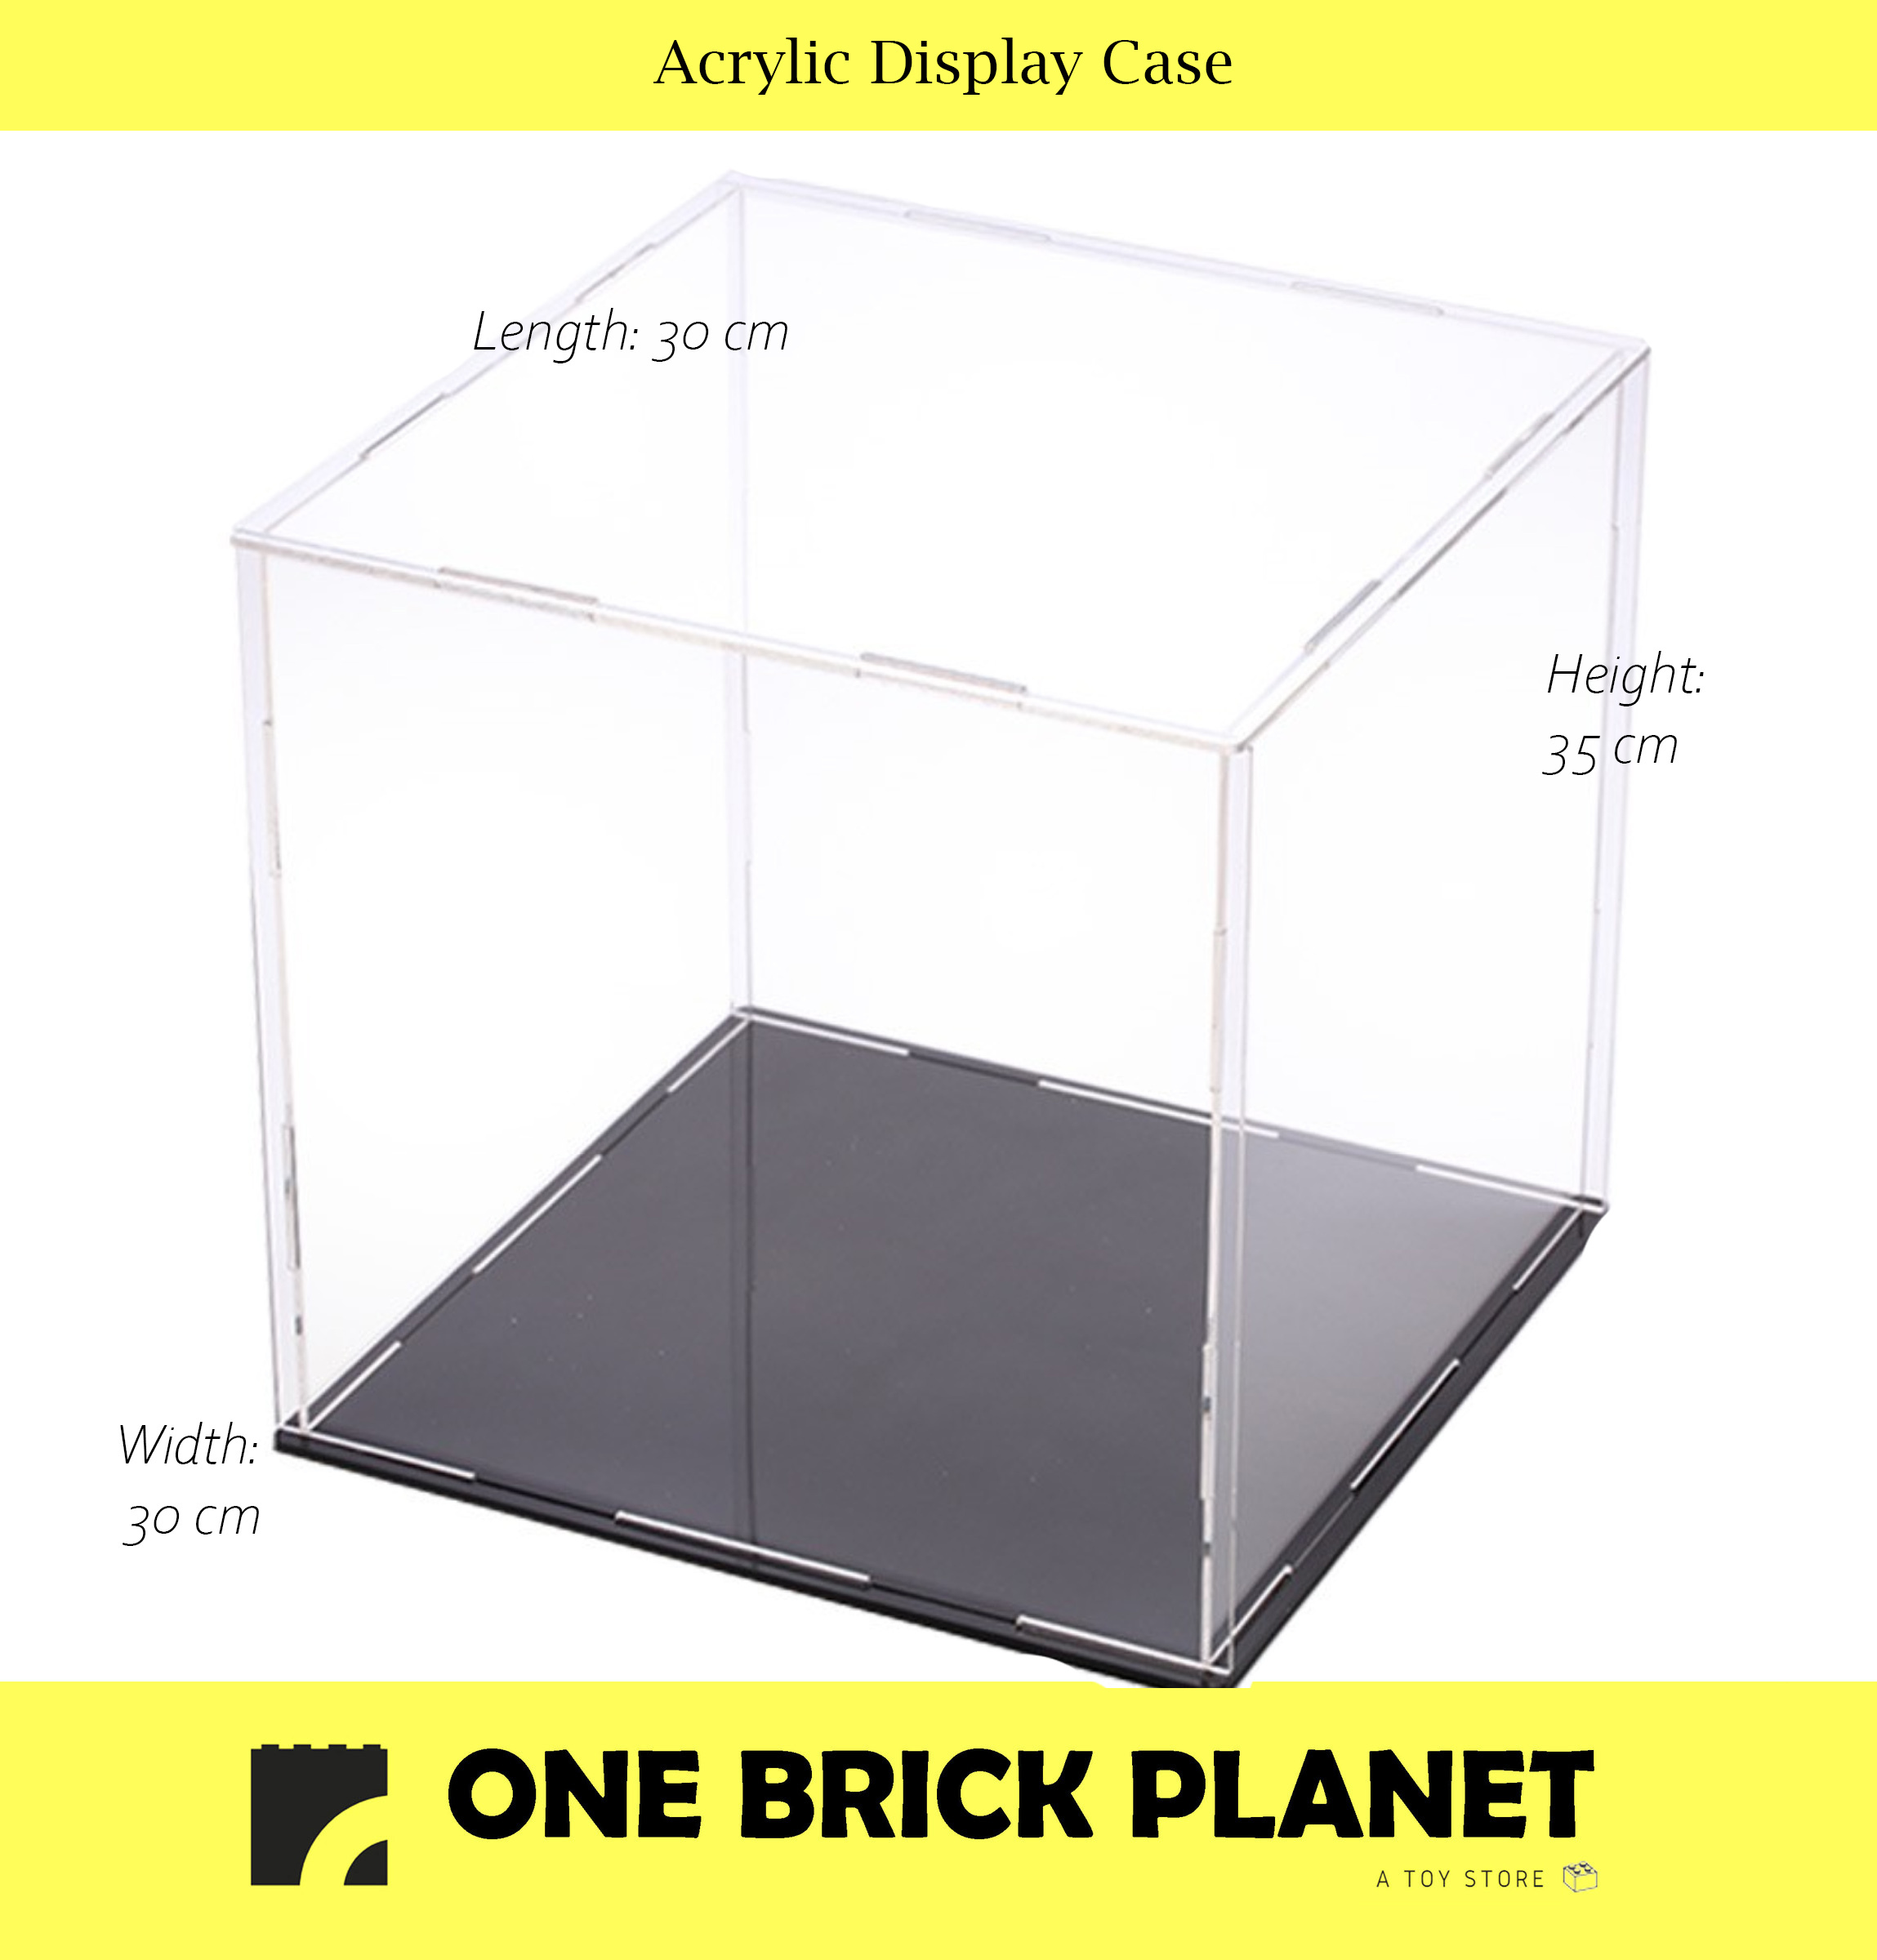 35x30x30] Acrylic Display Case with Black Base – One Brick Planet